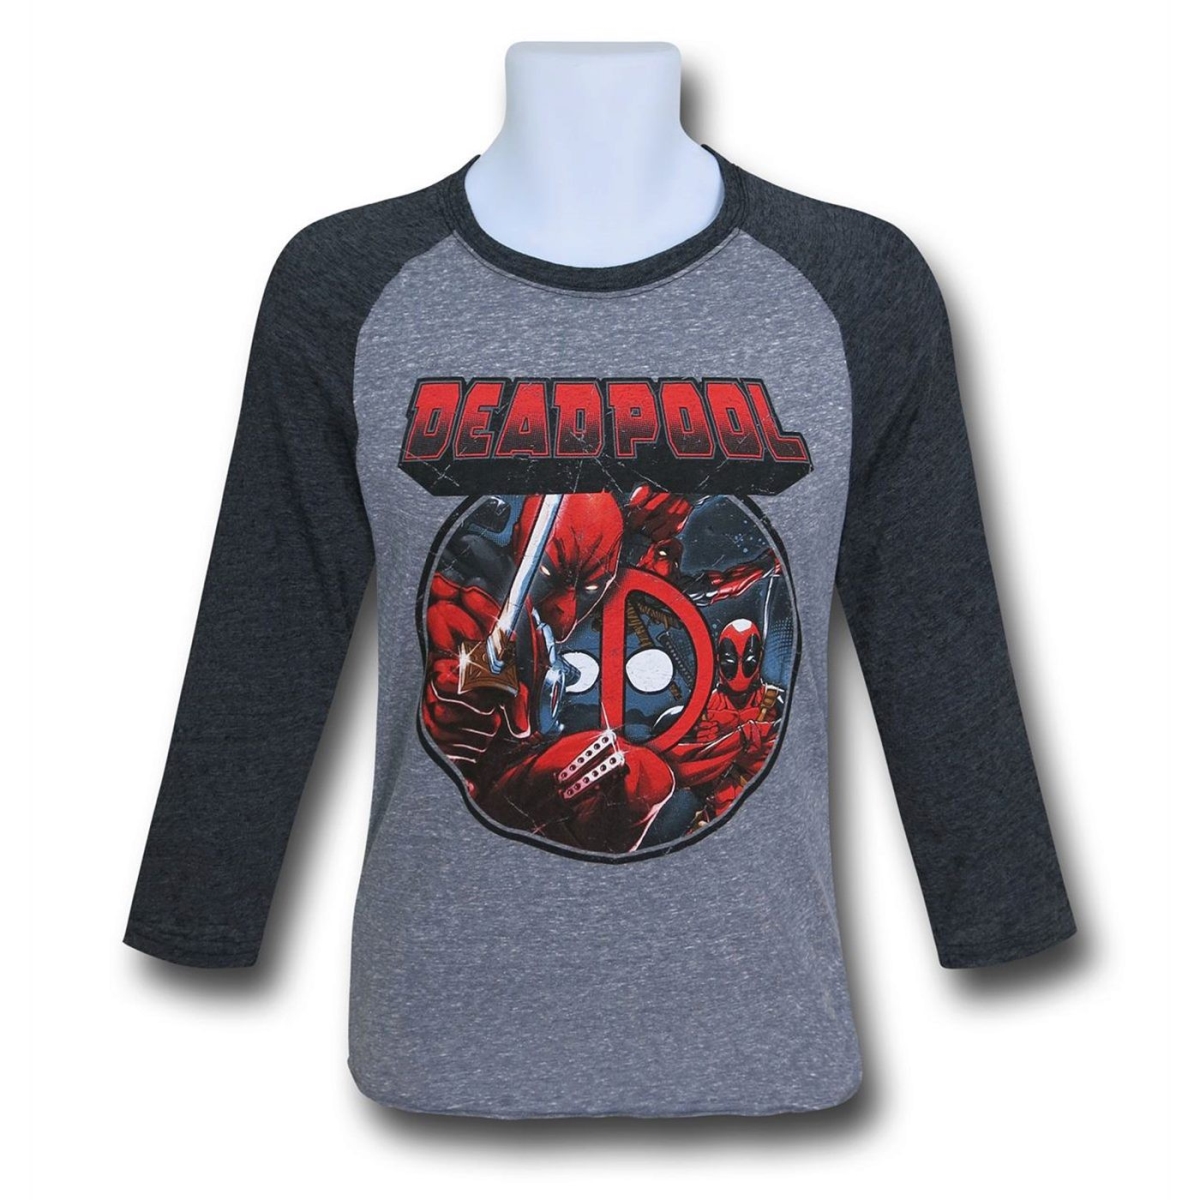 Deadpool On The Wall T Shirt On Fye Com Fandom Shop - deadpool shirts roblox